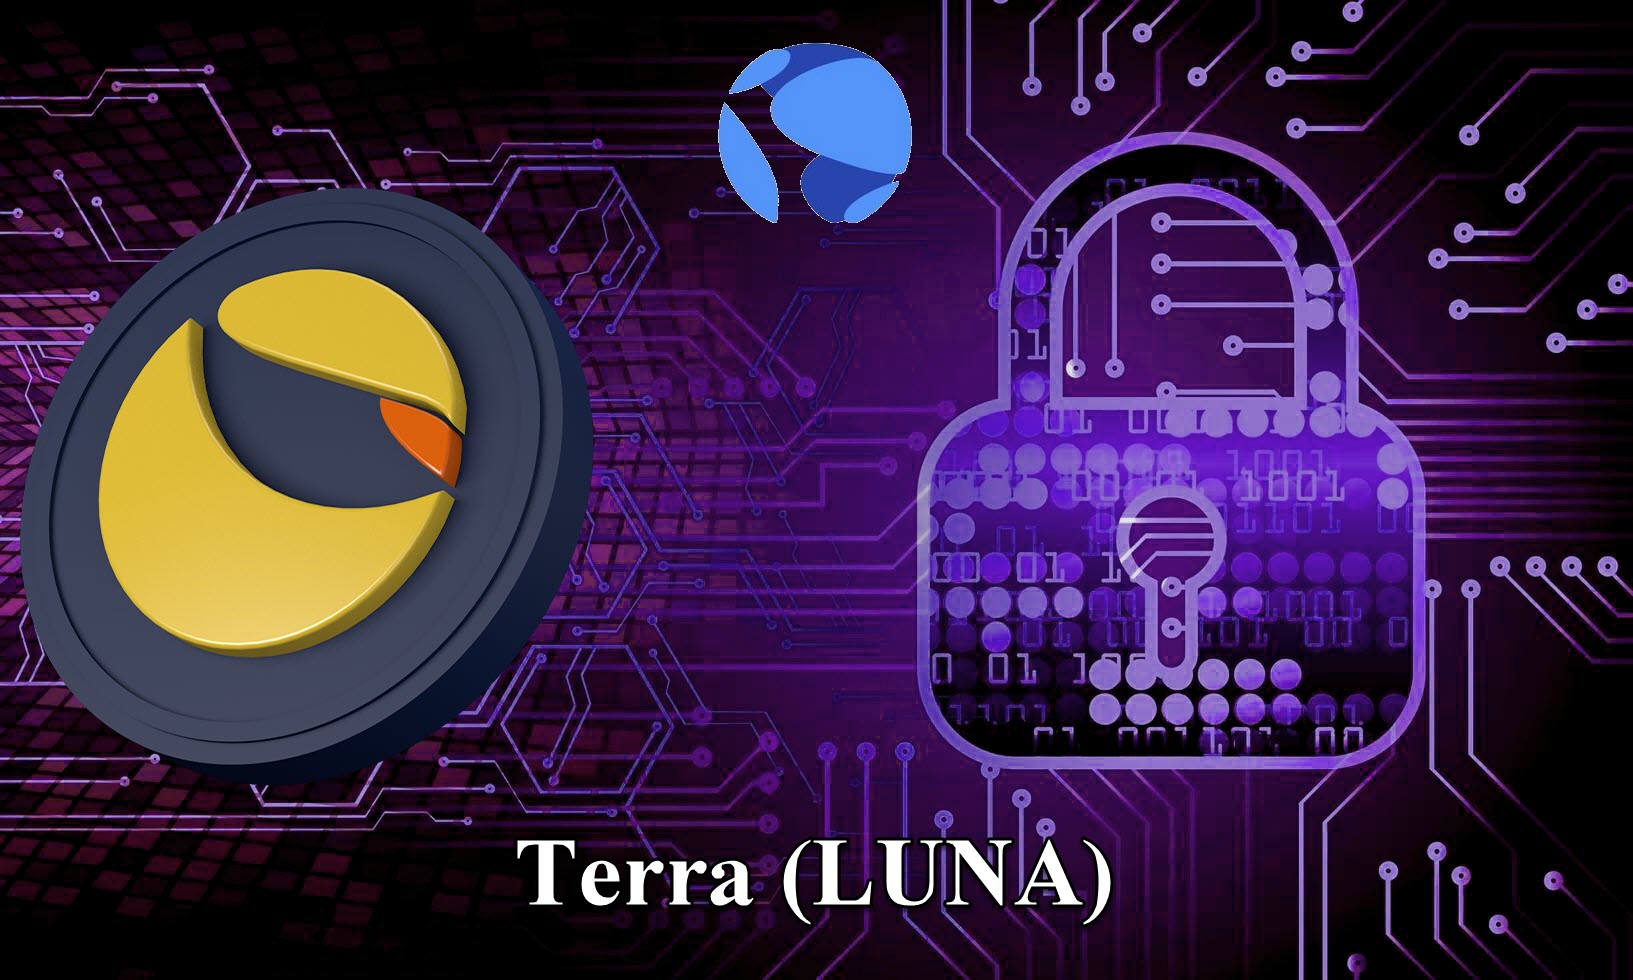 Introduction of Terra (Luna) Digital Currency